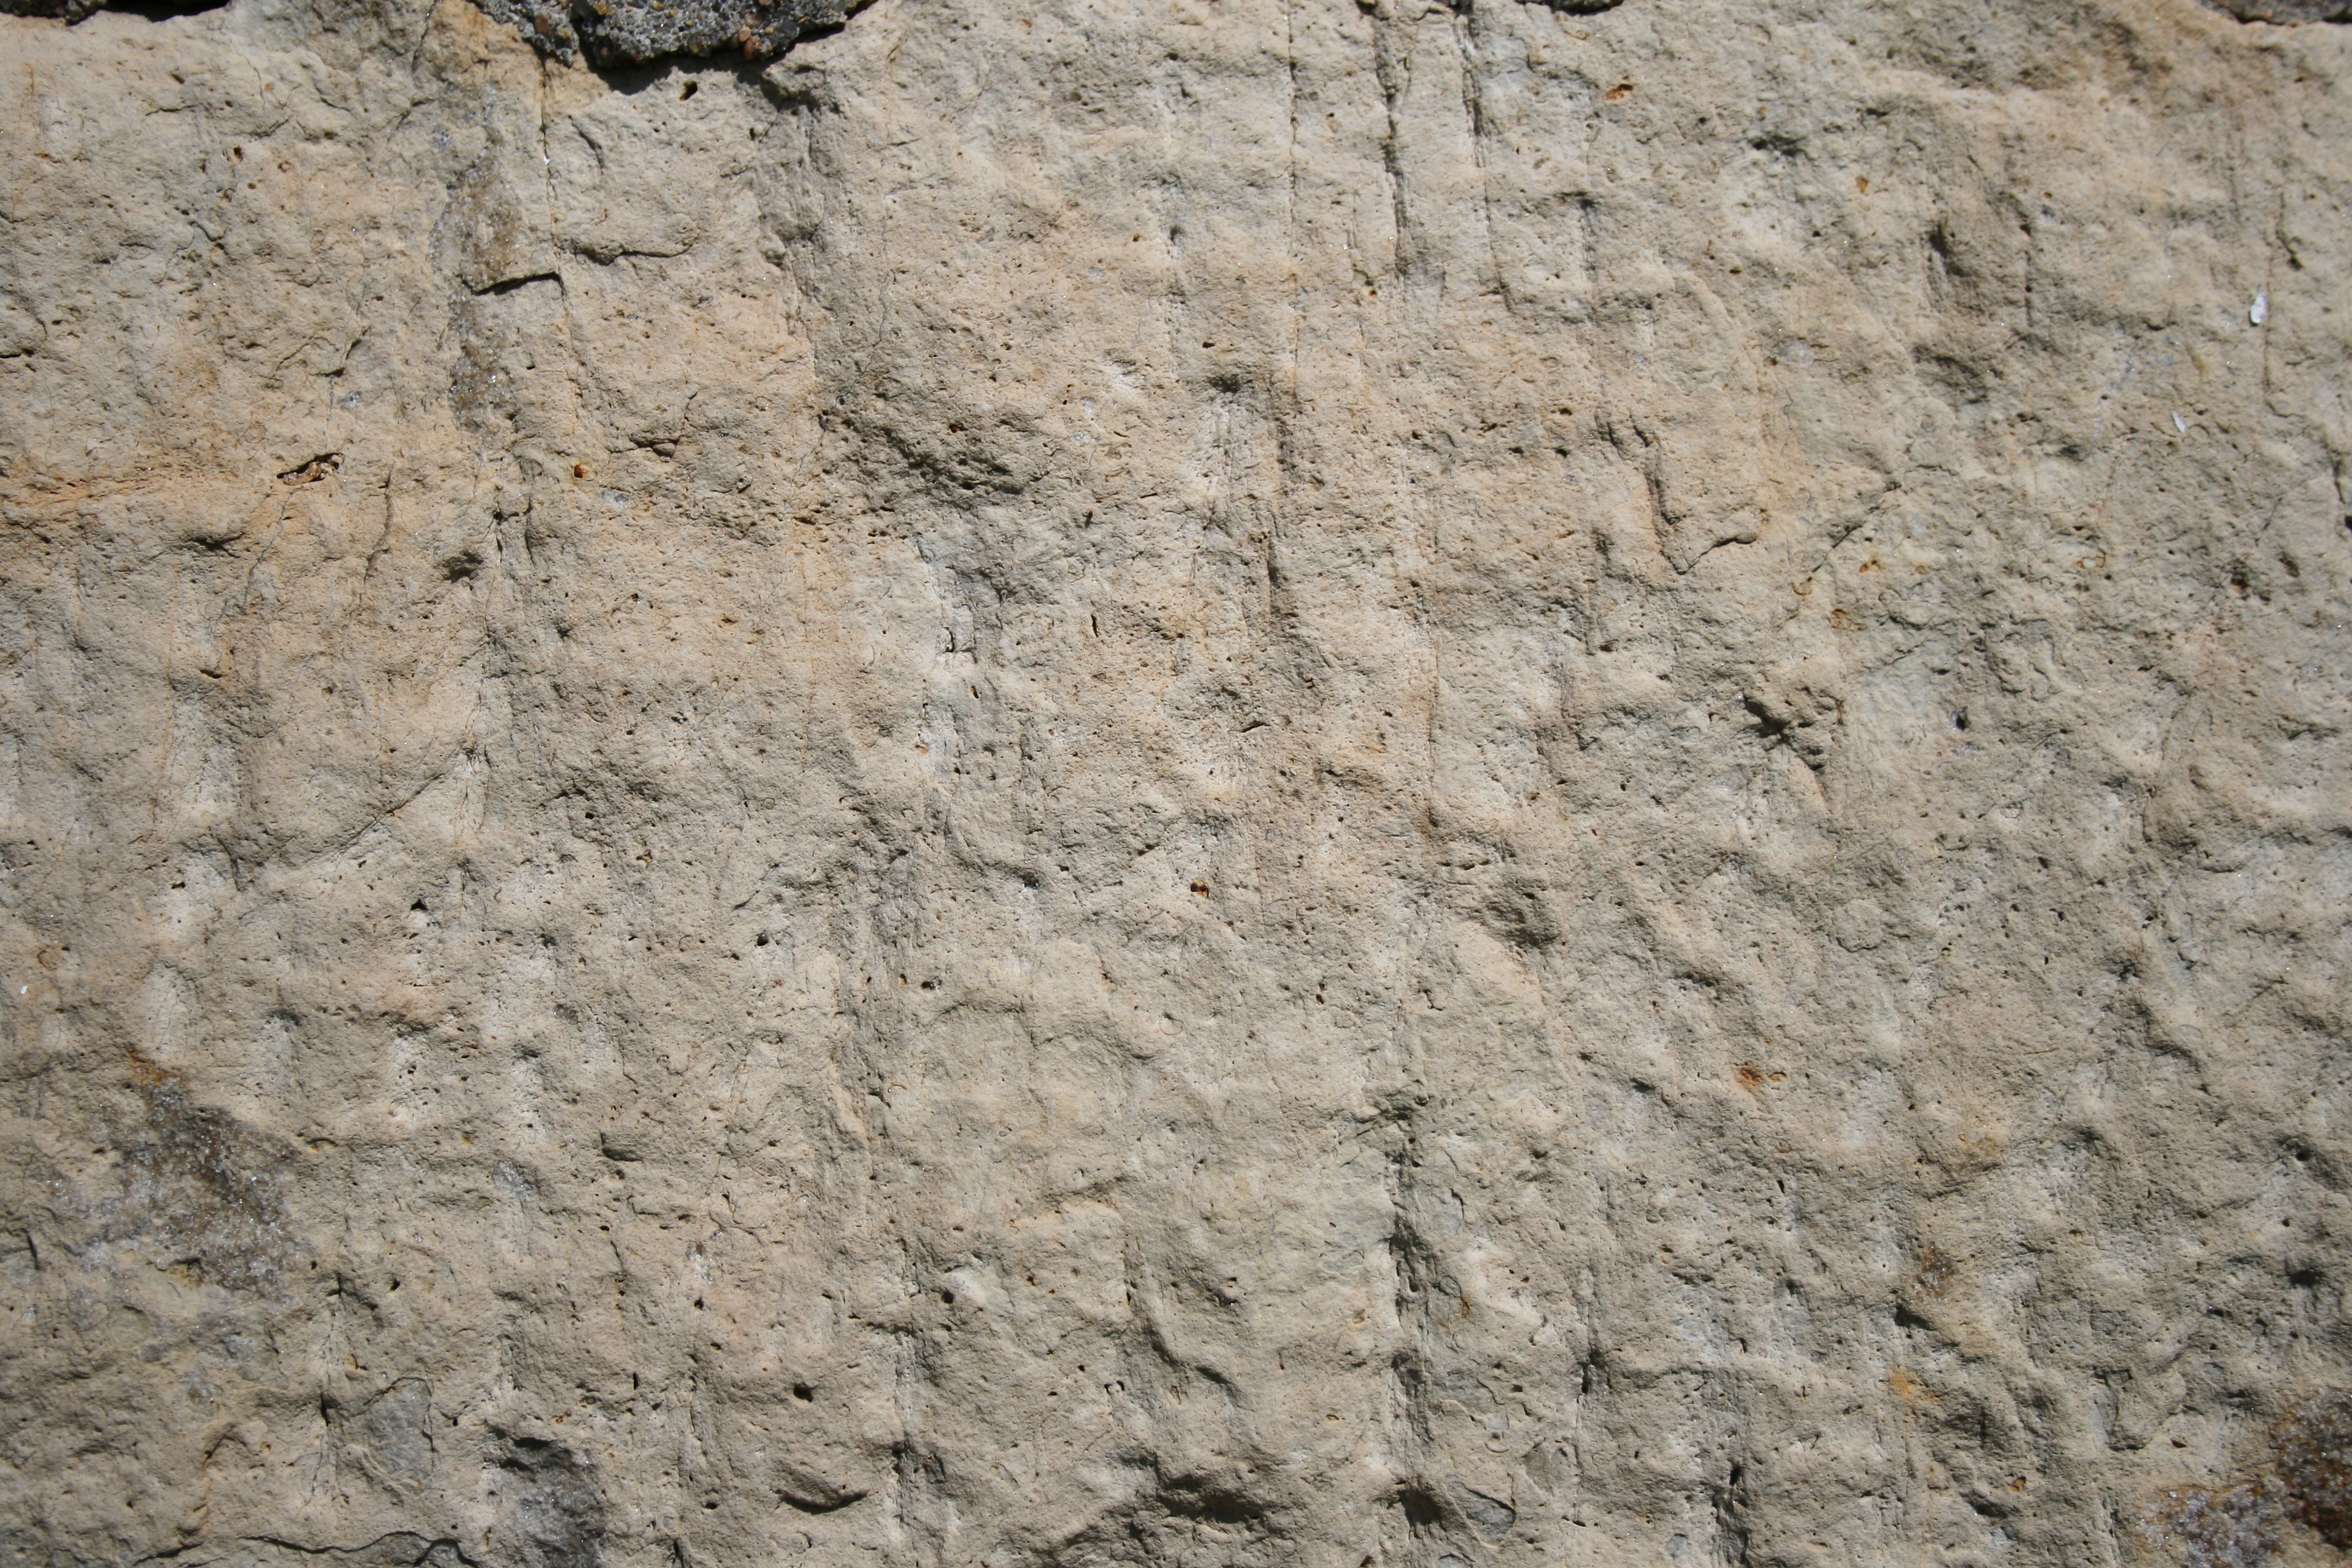 Rock surface photo